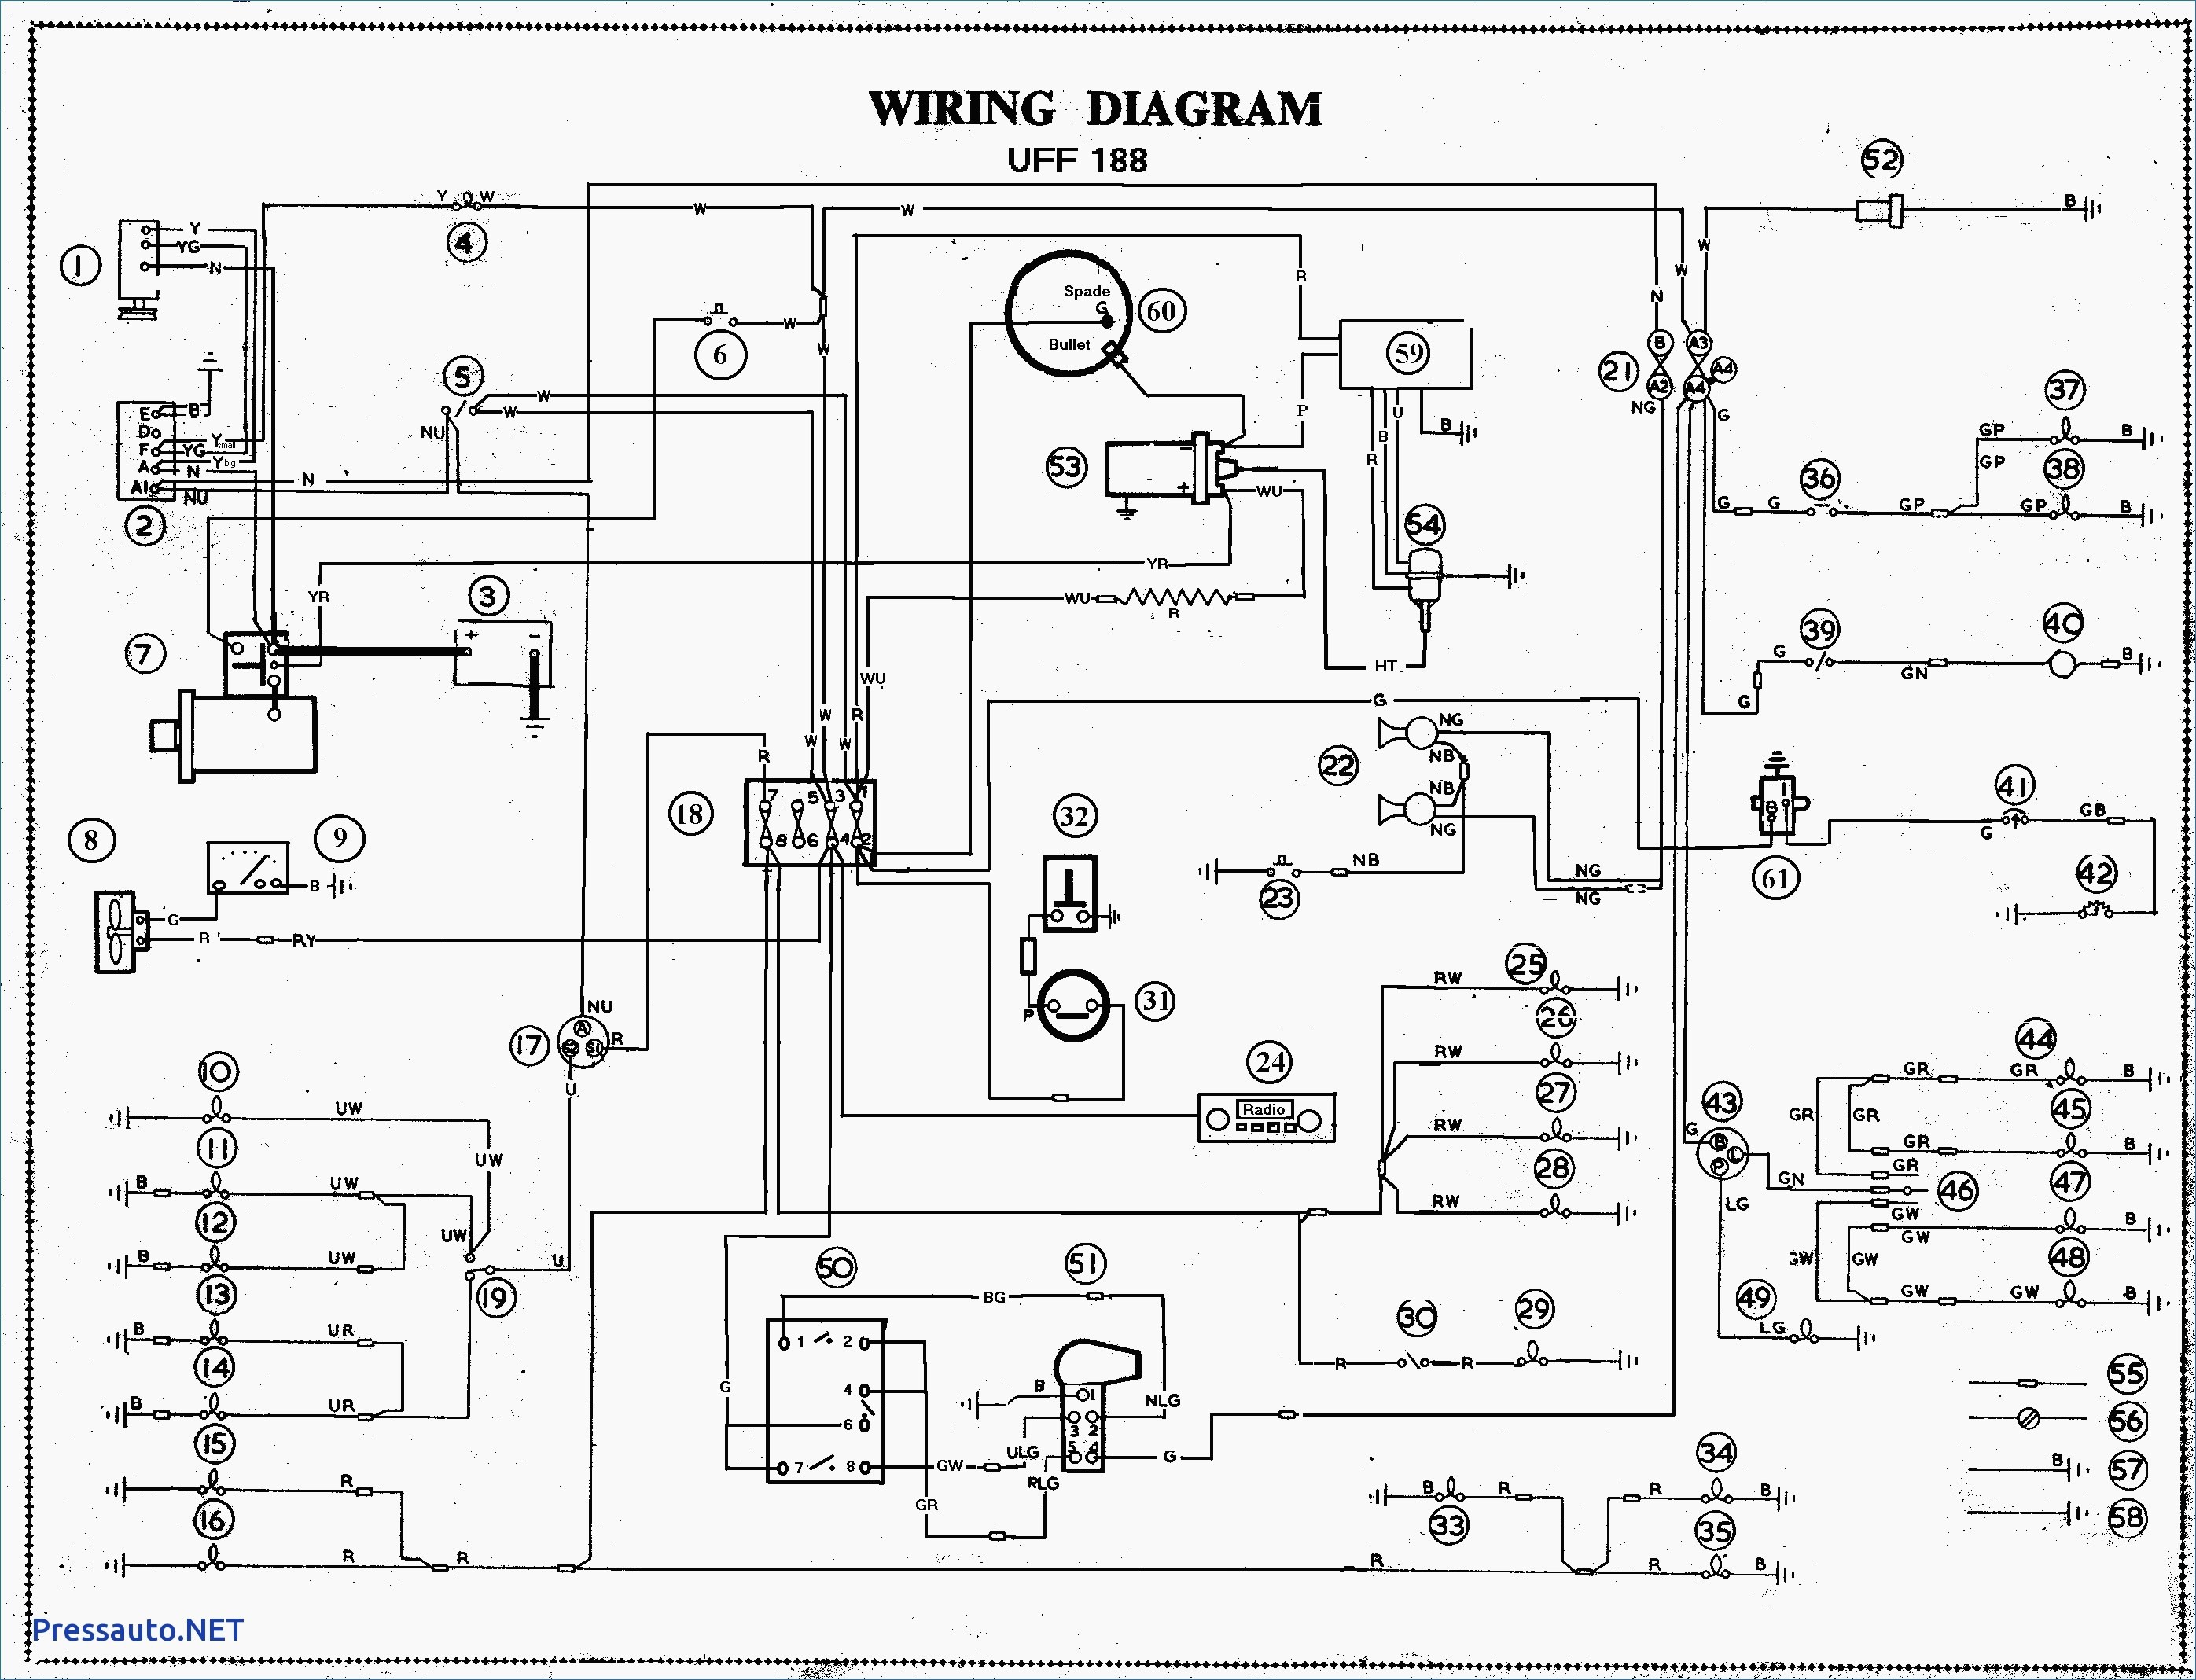 Auto Command Remote Starter Wiring Diagram Luxury Bulldog Remote Start Wiring Diagram Picture Collection Best Of Auto Command Remote Starter Wiring Diagram